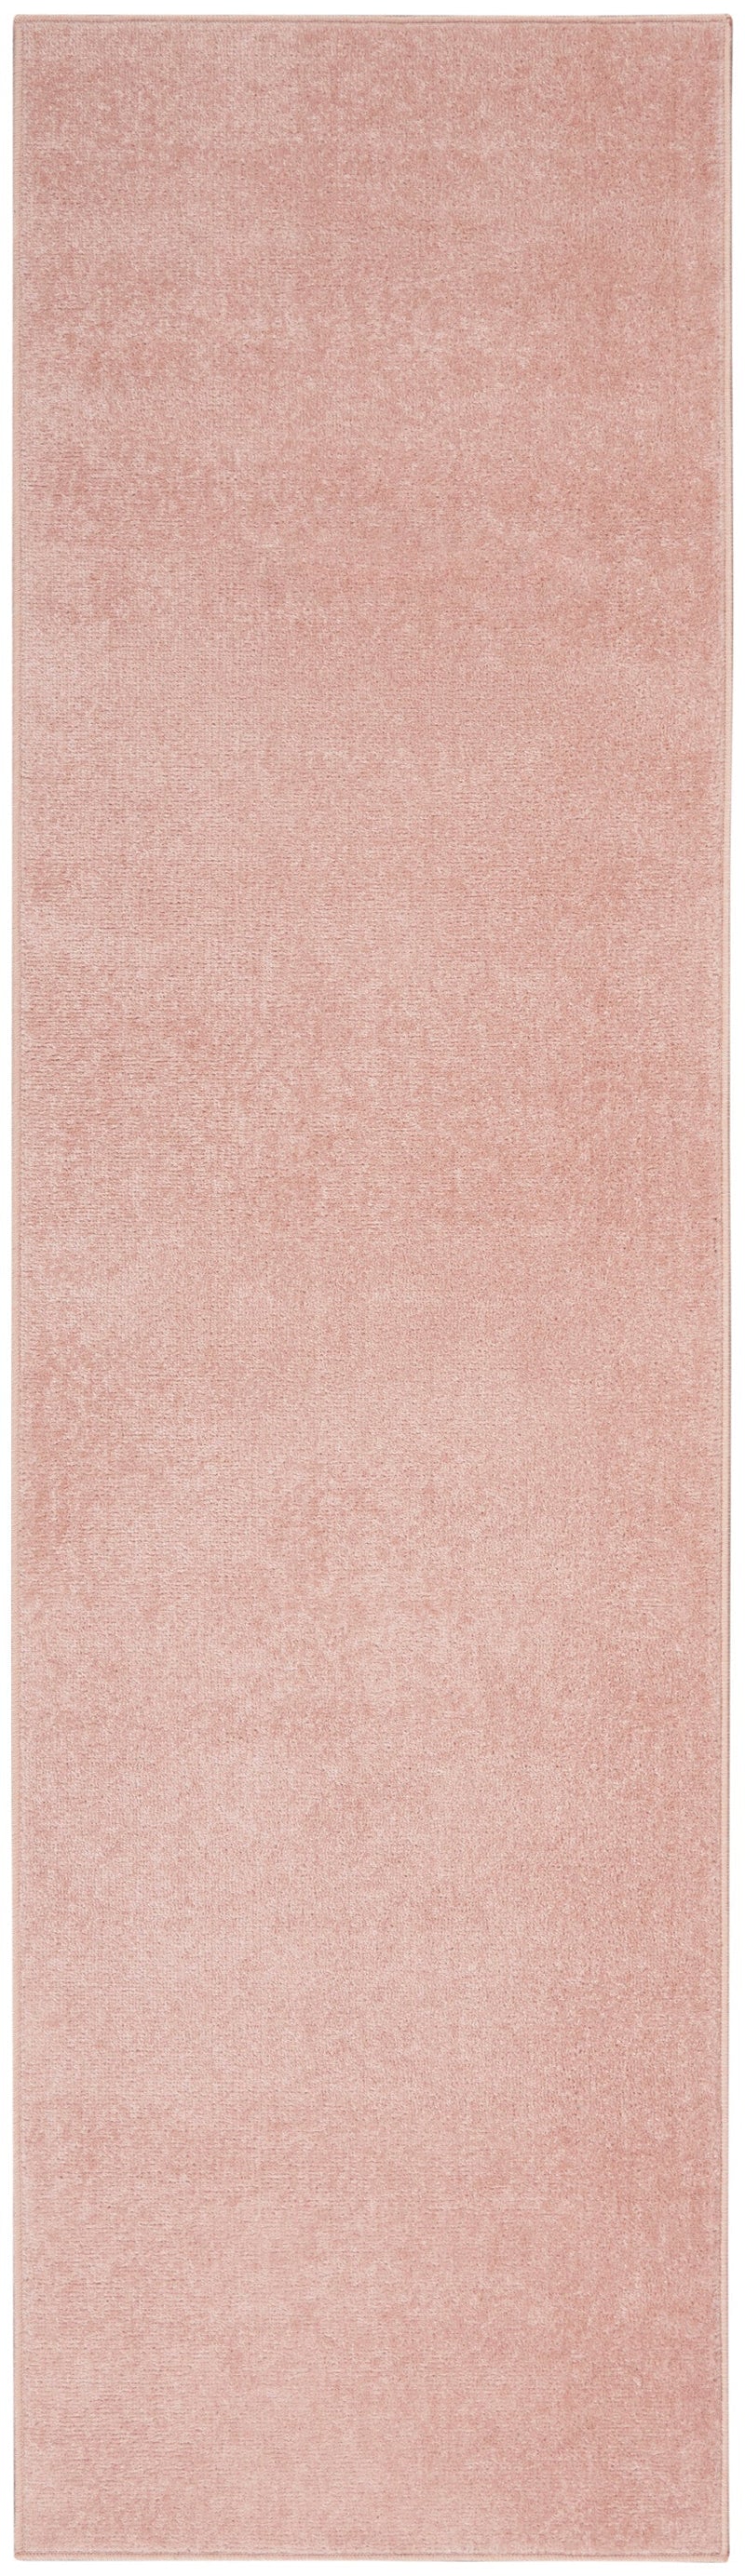 media image for nourison essentials pink rug by nourison 99446824776 redo 4 262